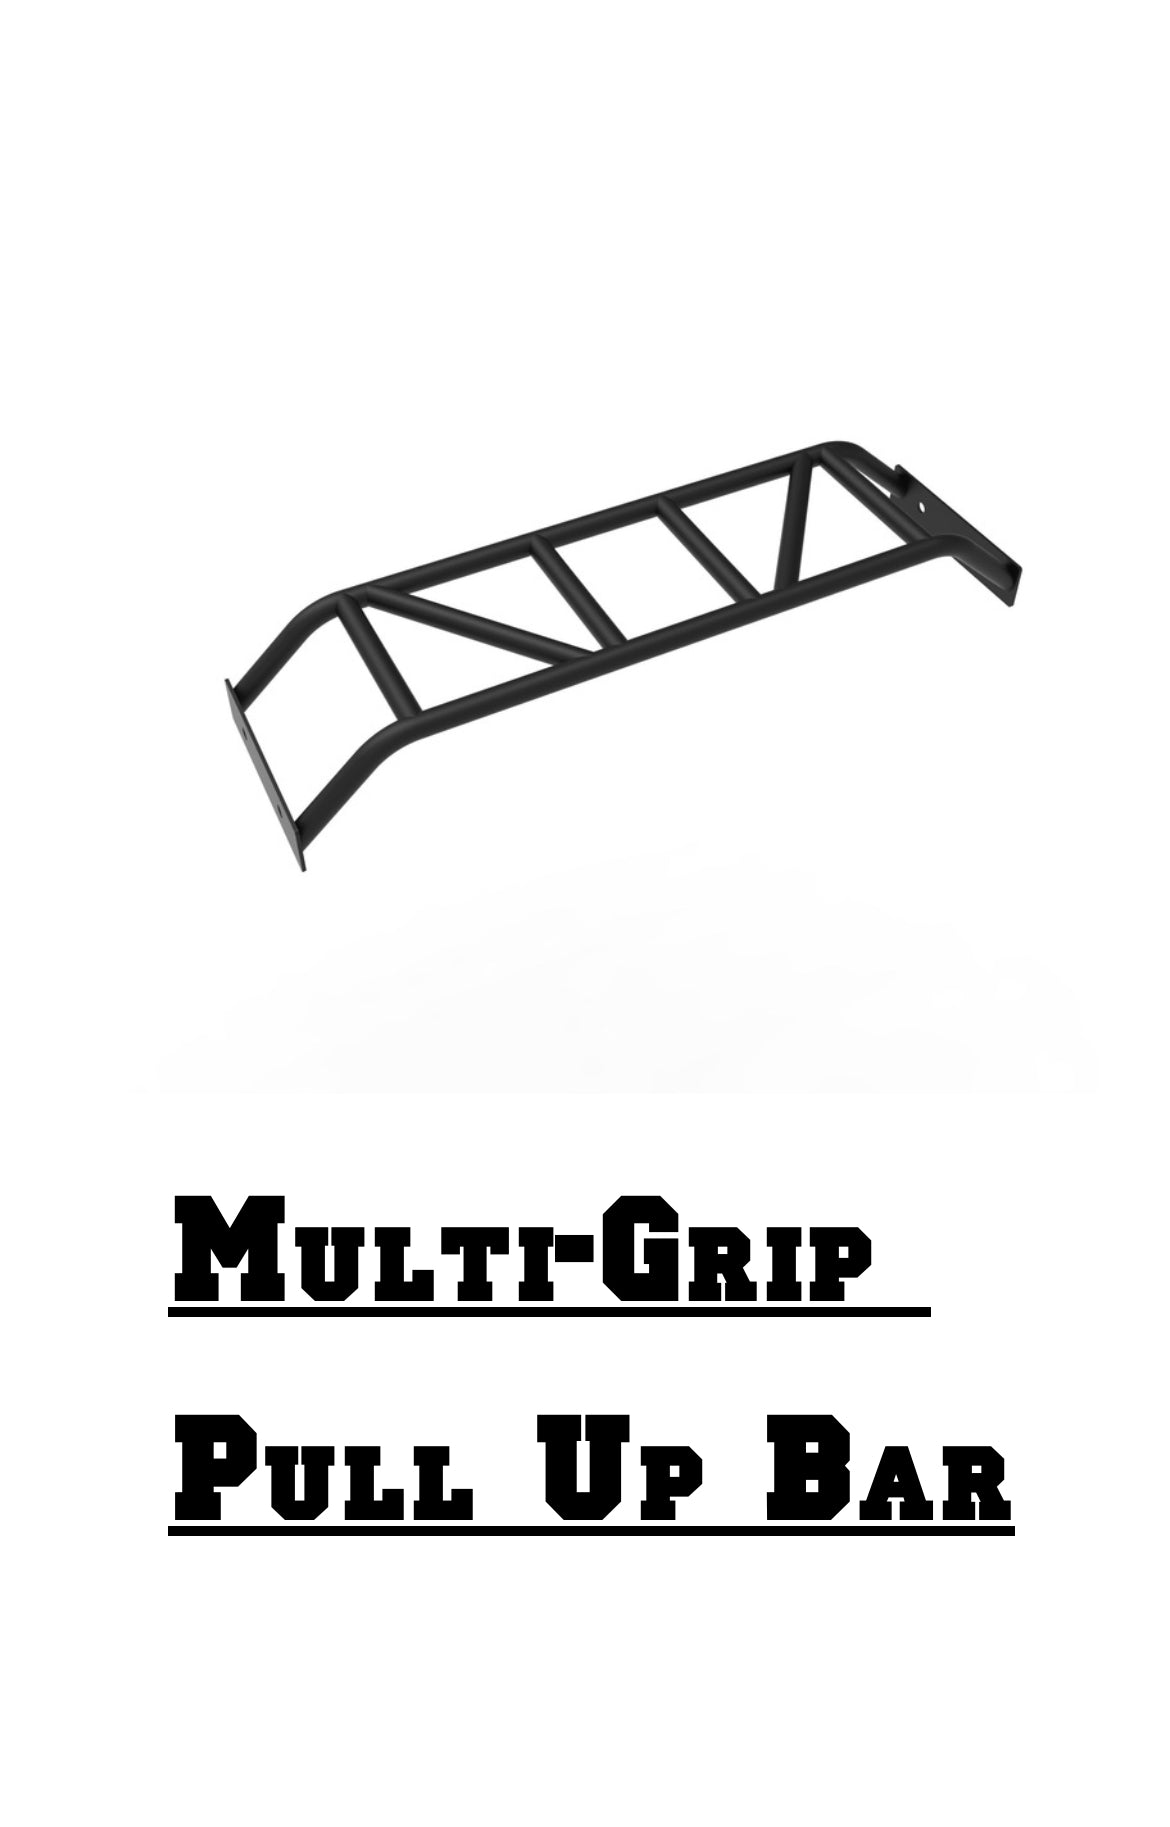 Multi grip pull up bar